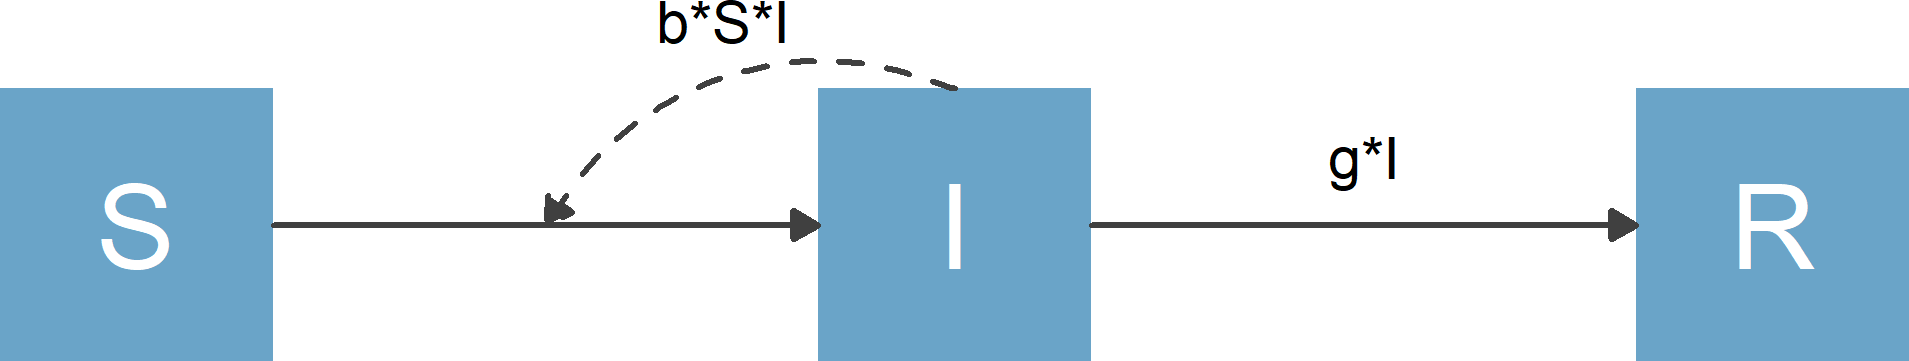 Flow diagram for basic SIR model